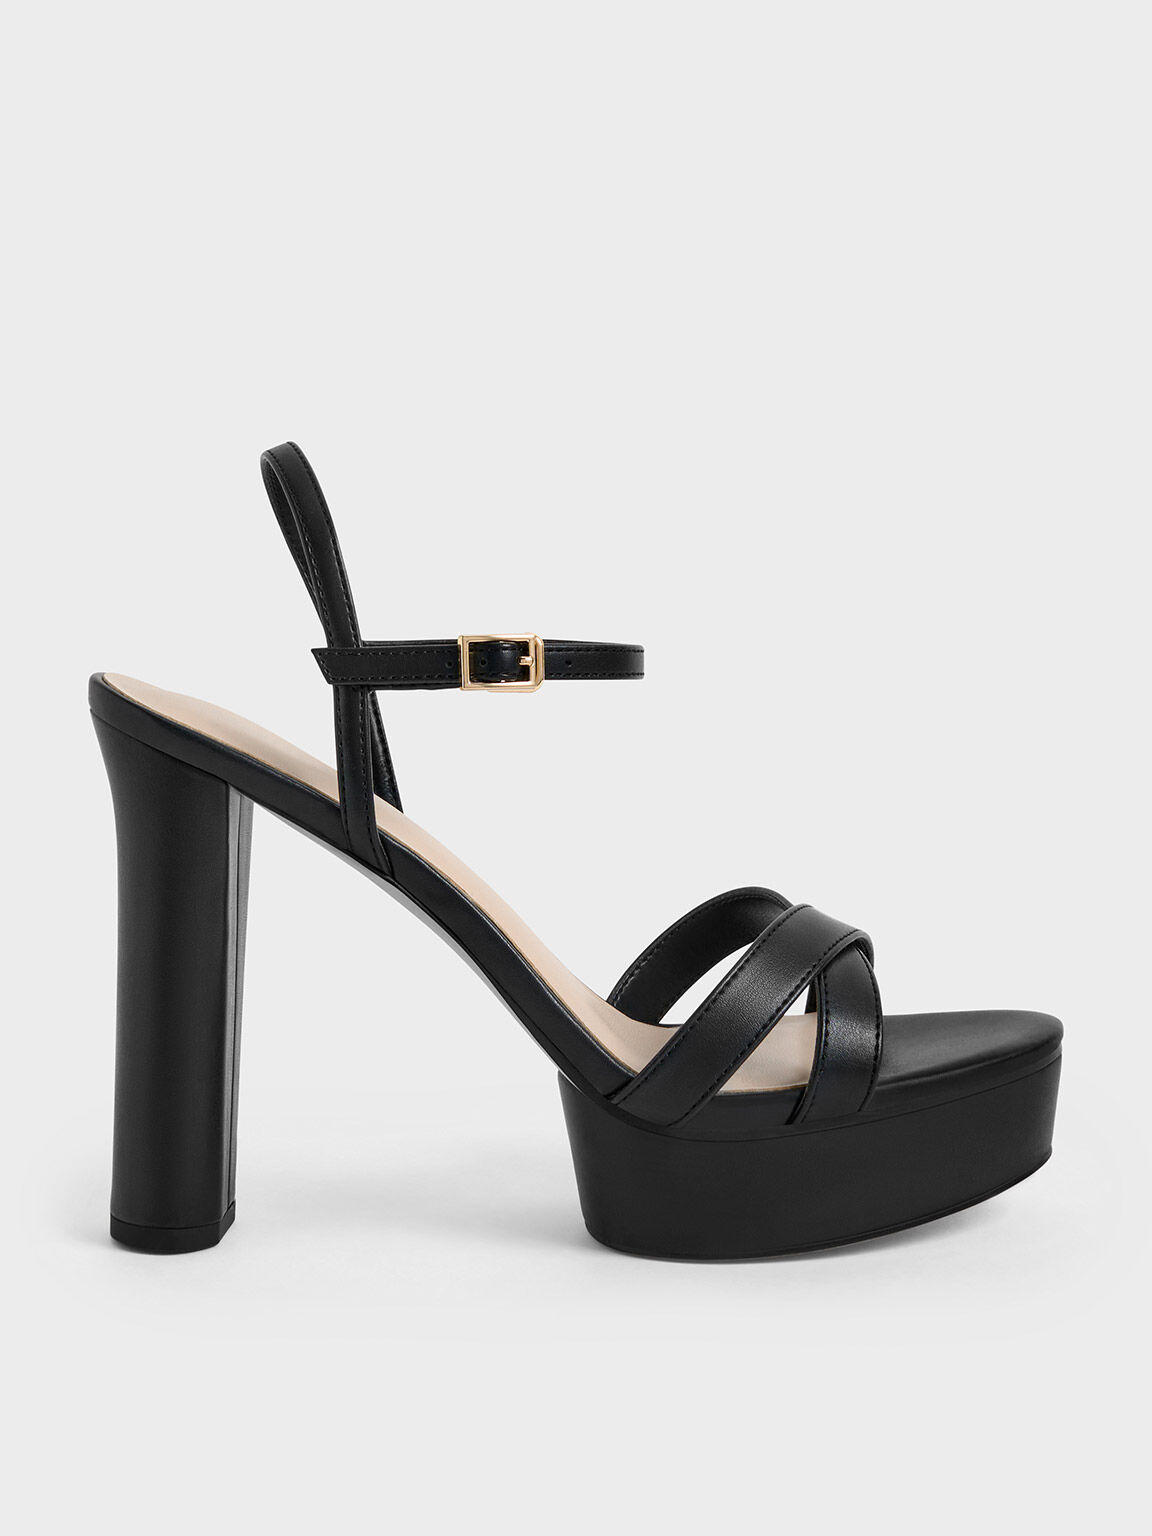 Platform black heeled sandals | Deepika Padukone